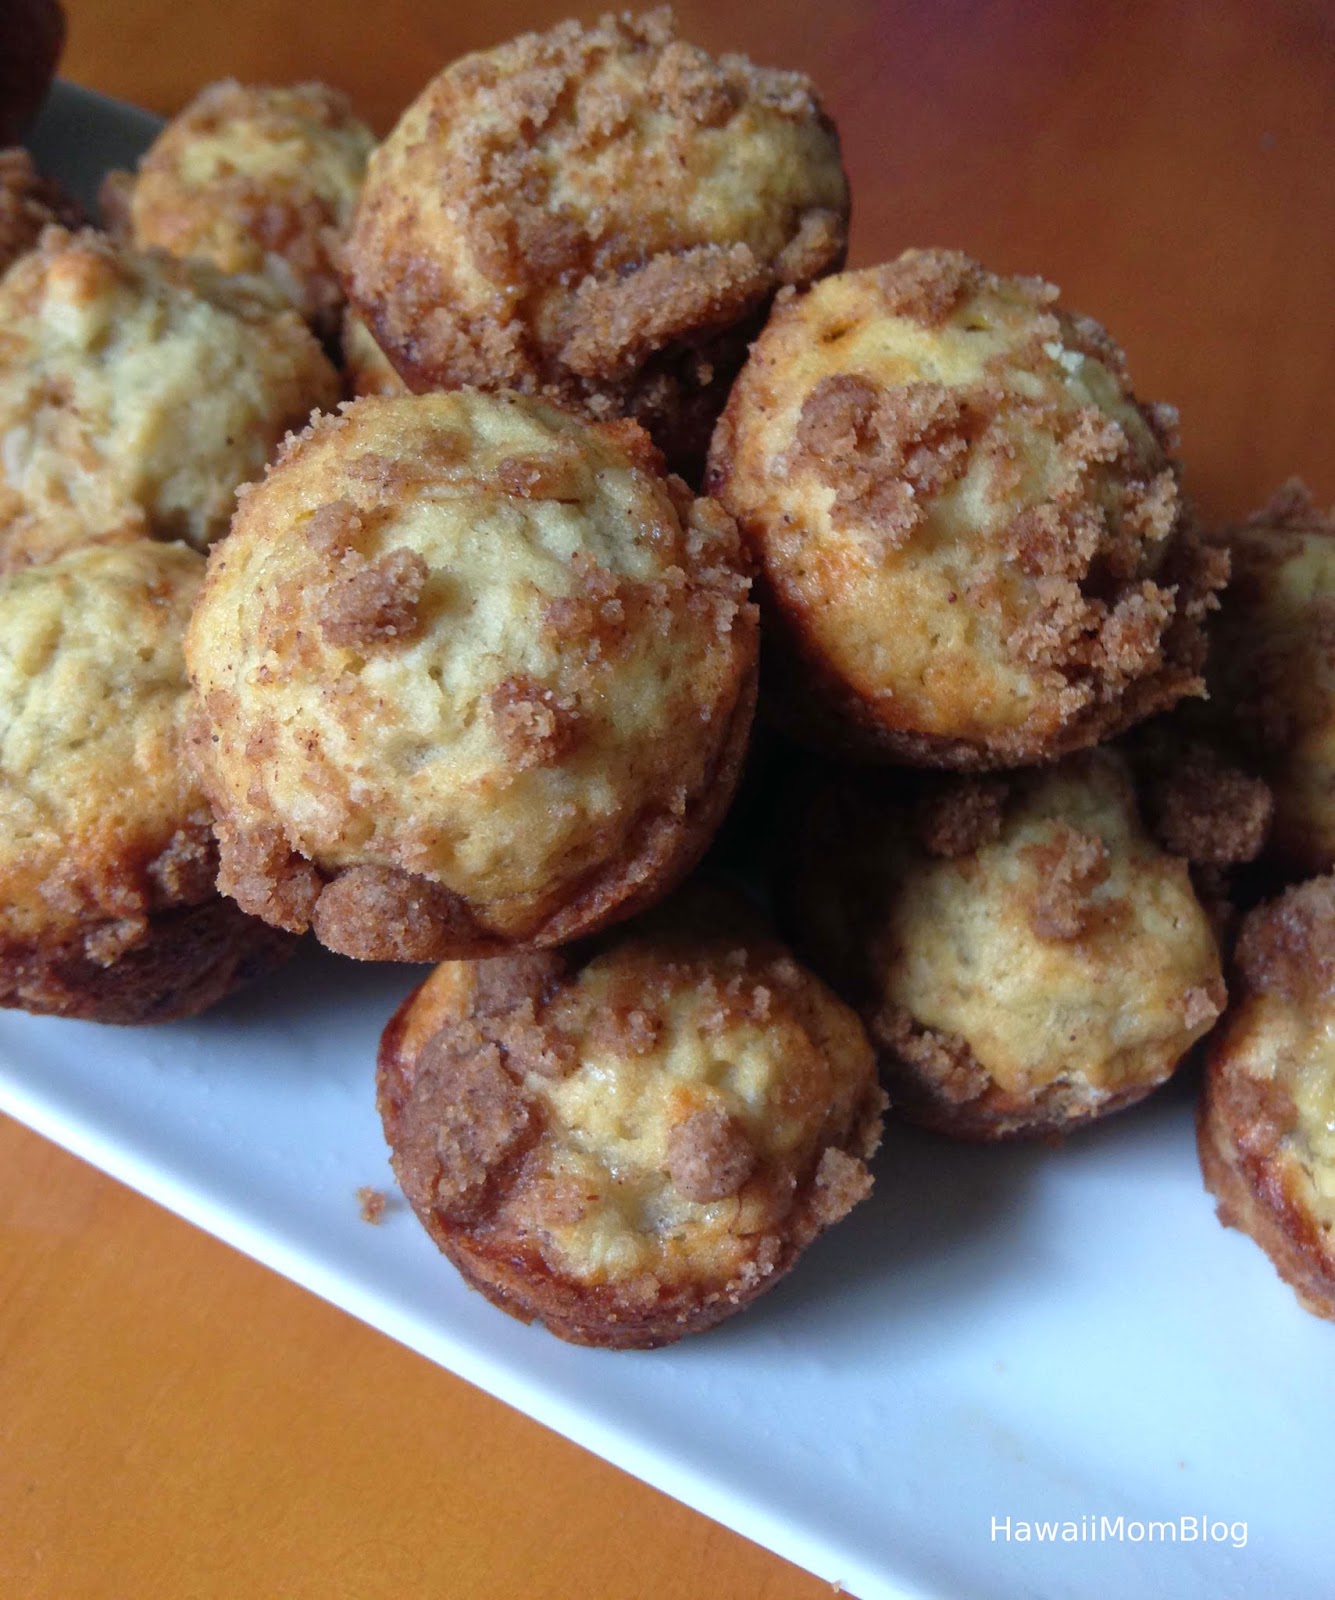 Hawaii Mom Blog: Mini Banana Muffins with Crumb Topping